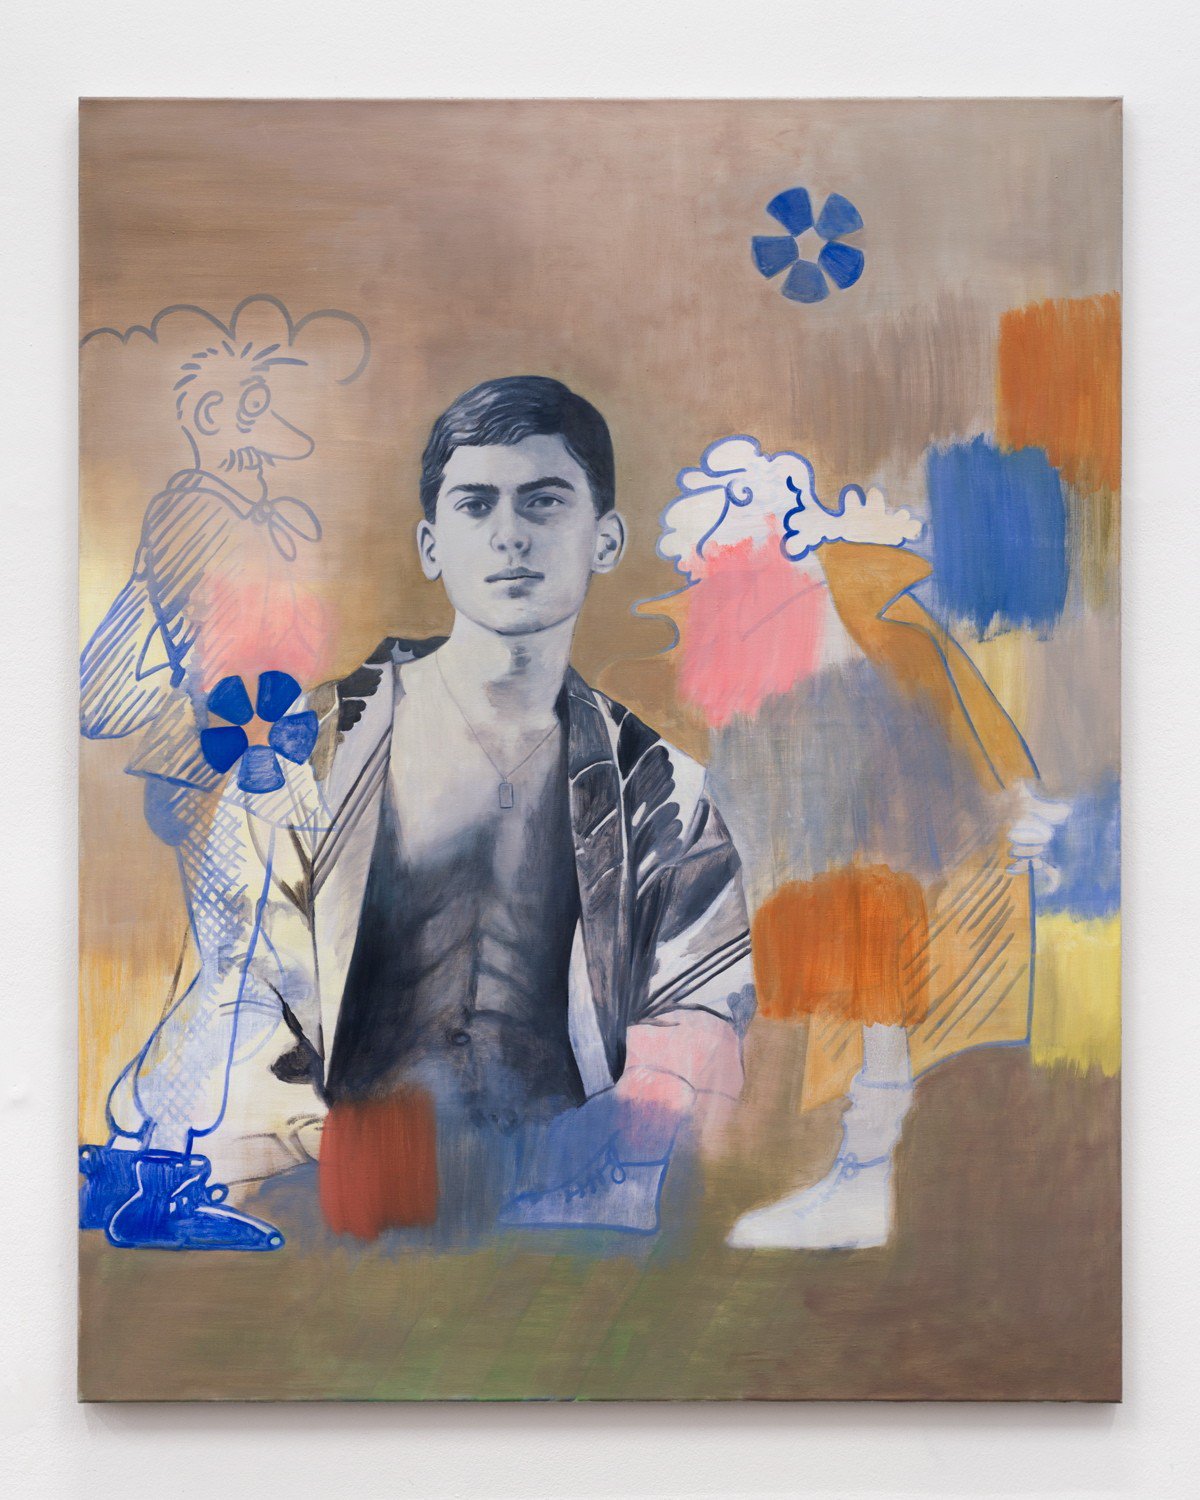 Birgit MegerleAntichambre, 2015Oil on canvas150 x 120 cm